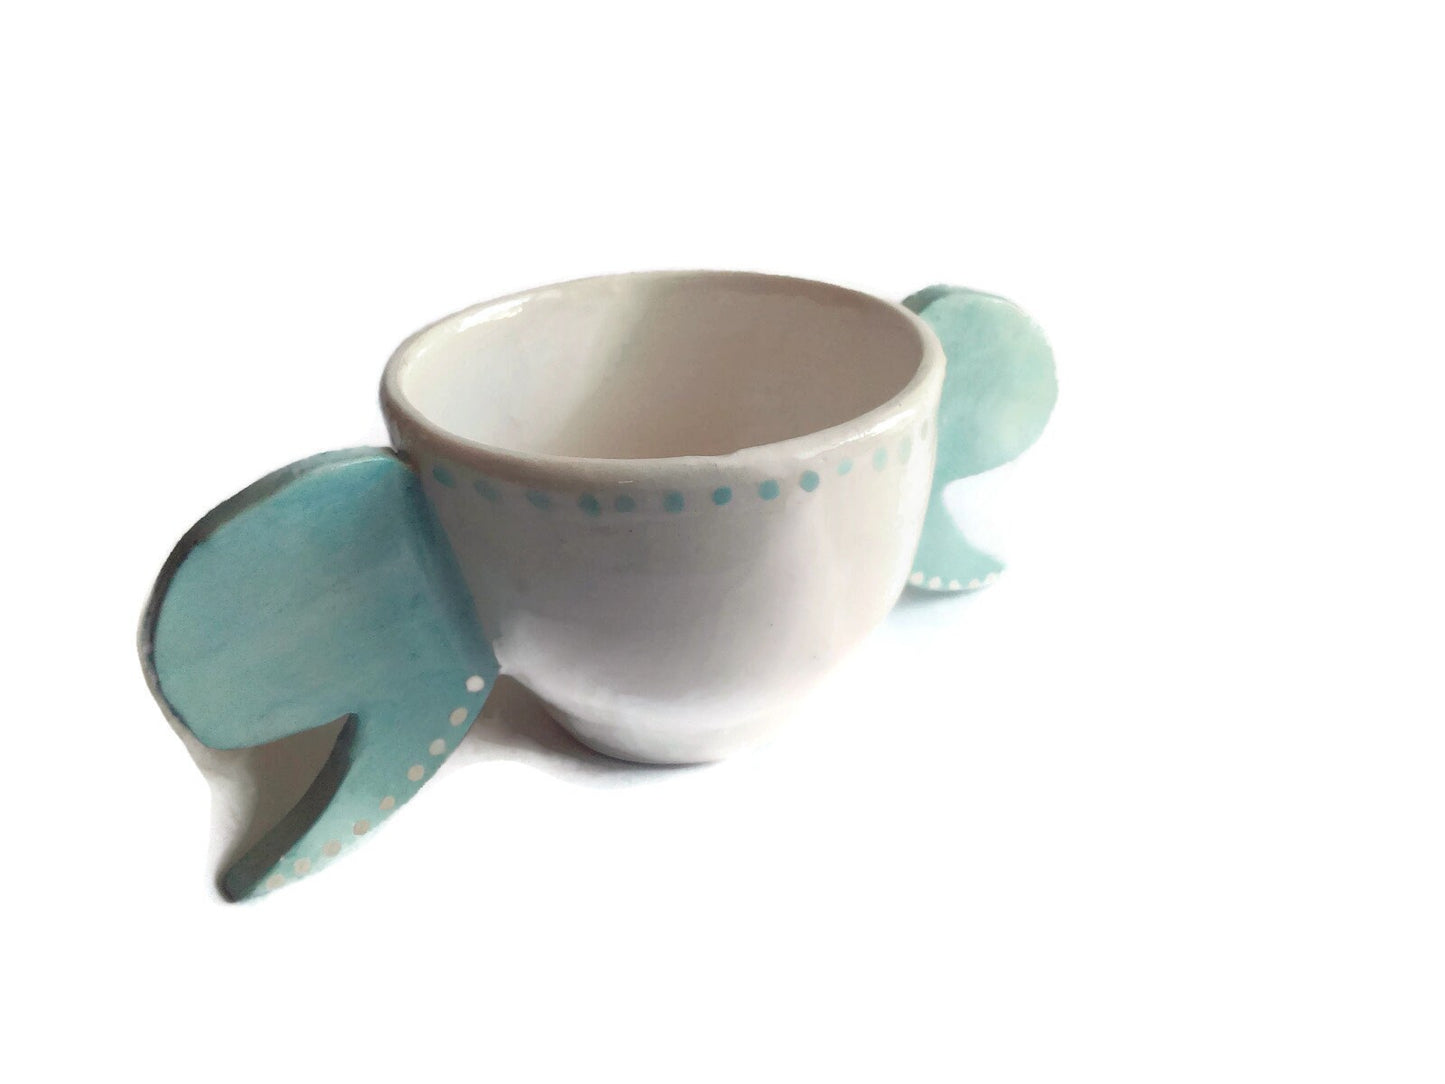 LARGE COFFEE MUG, Best Gifts For Her, Handmade Ceramic Funny Mugs For Women, Novelty Hot Chocolate Mug - Ceramica Ana Rafael